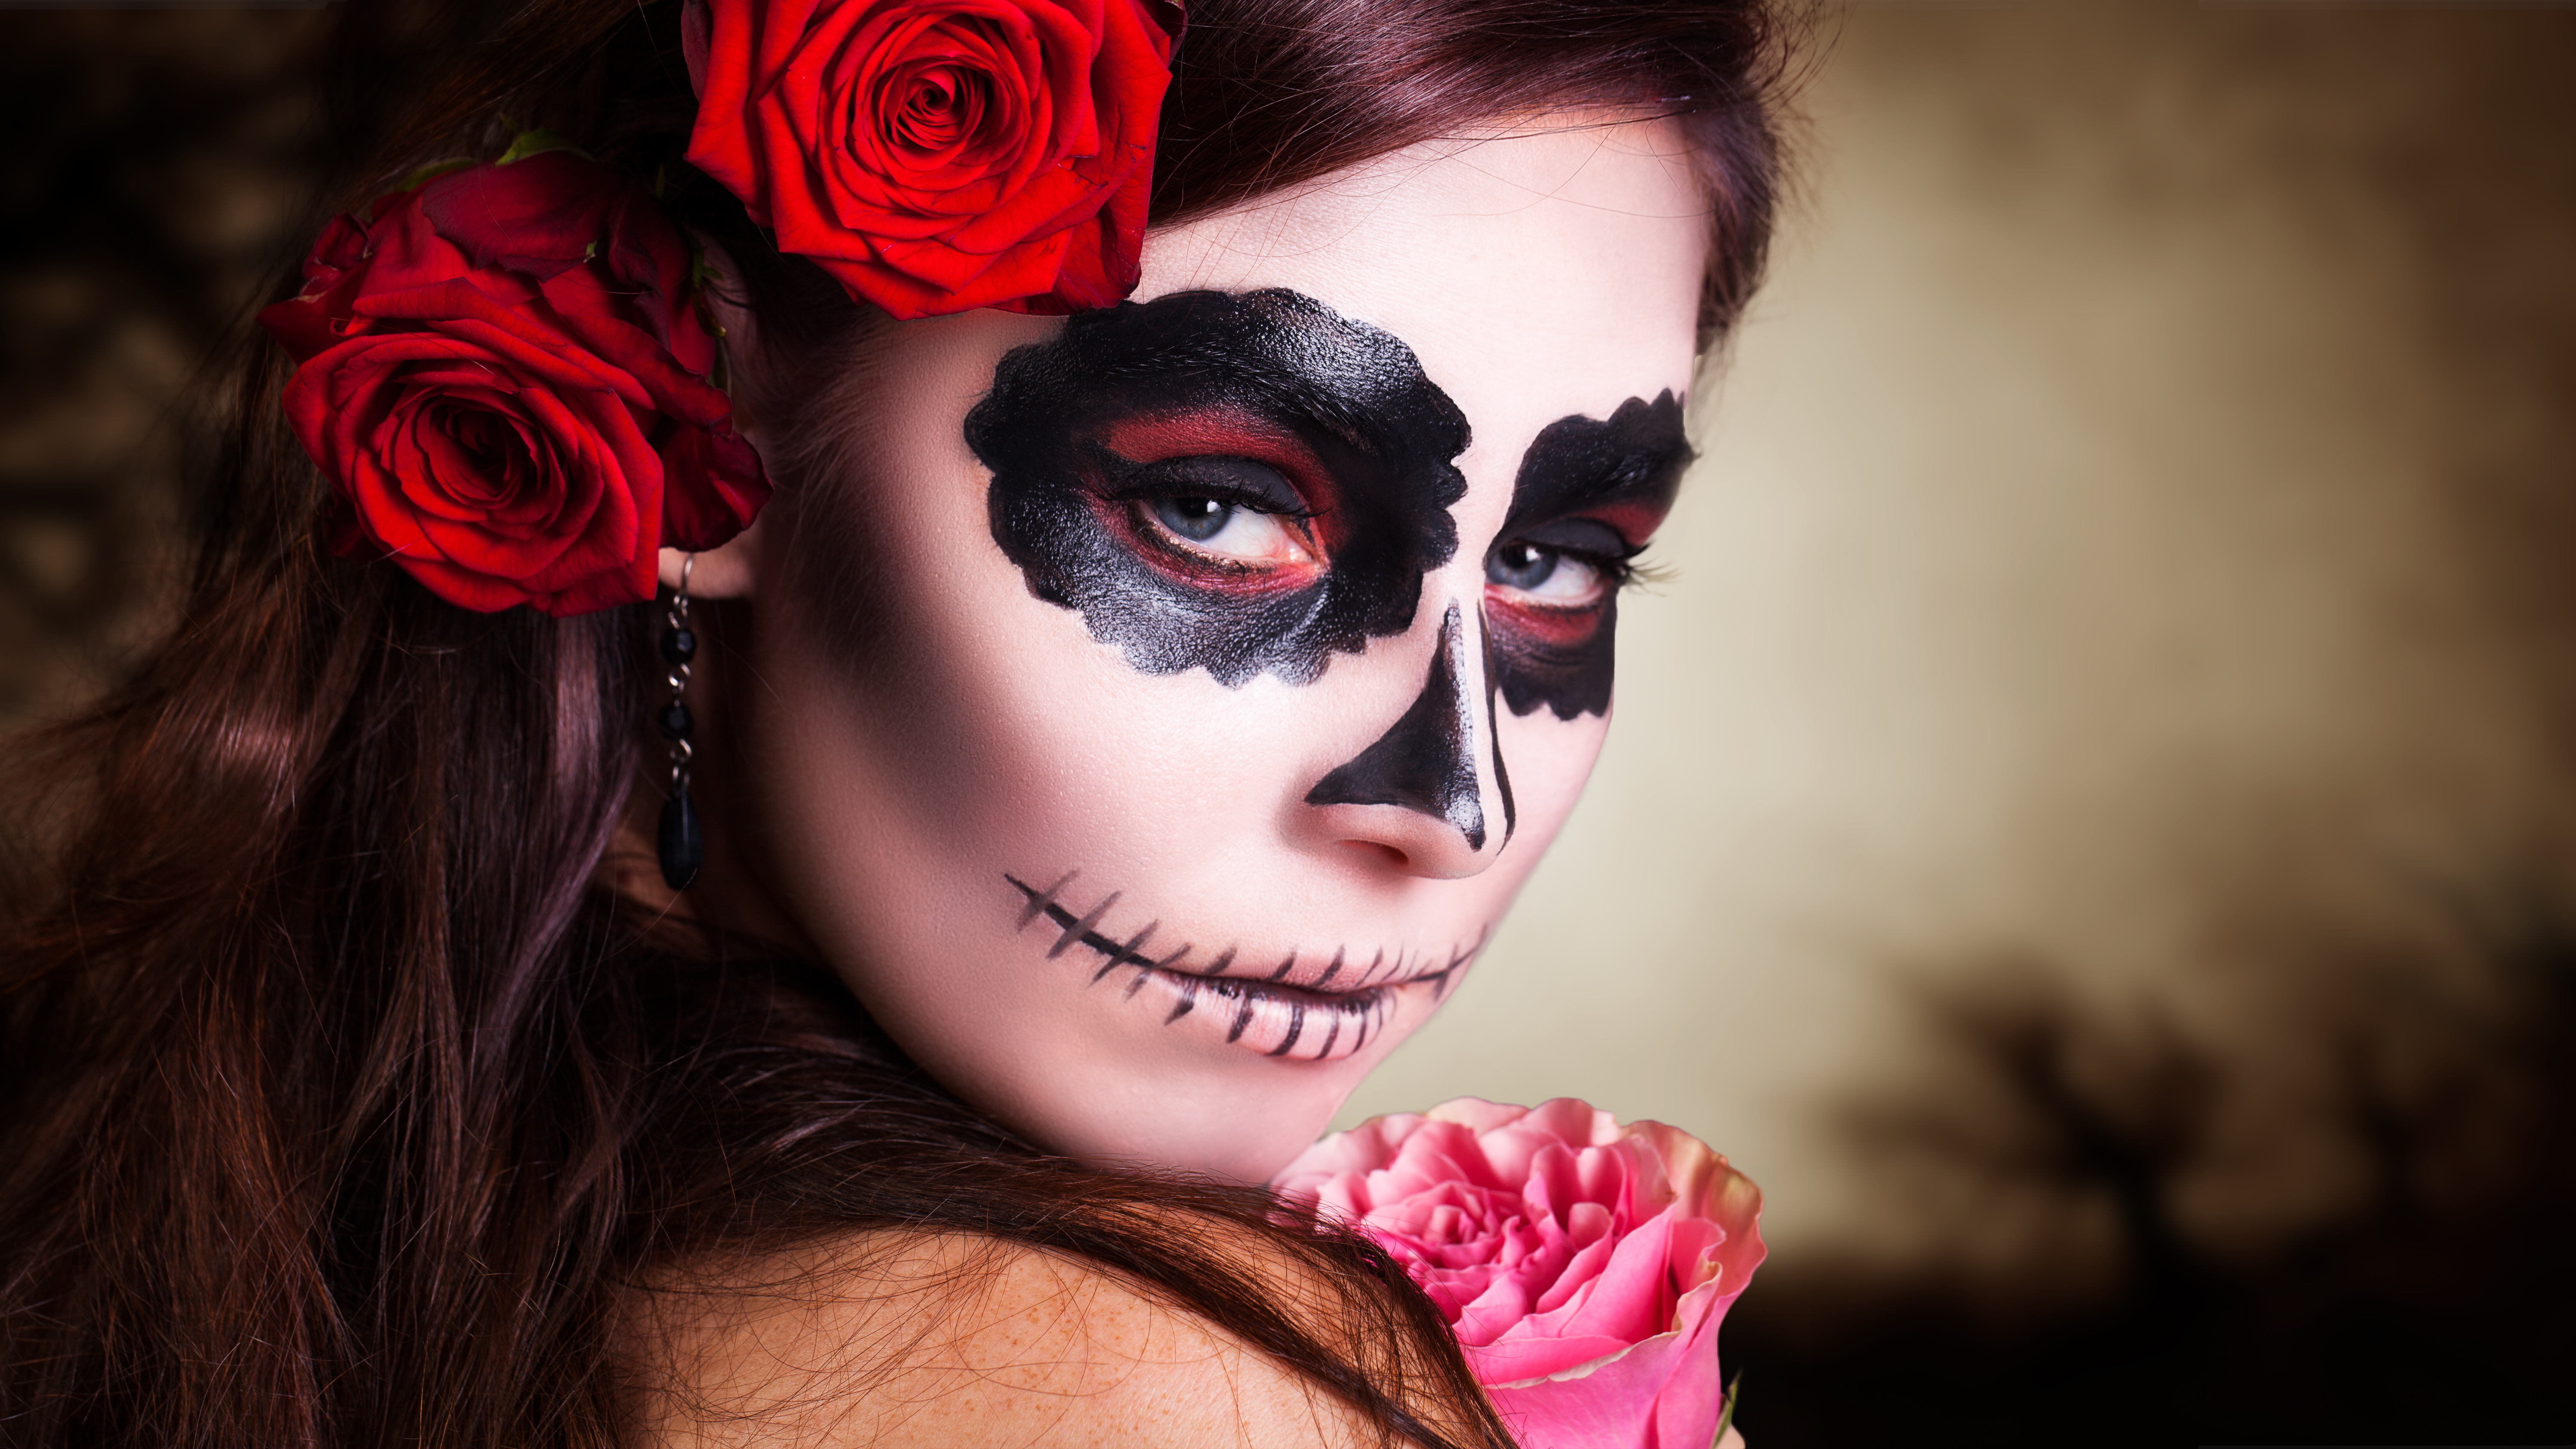 Blue Eyes Brunette Day Of The Dead Face Flower Girl Makeup Red Rose Rose Sugar Skull Woman 6000x3375